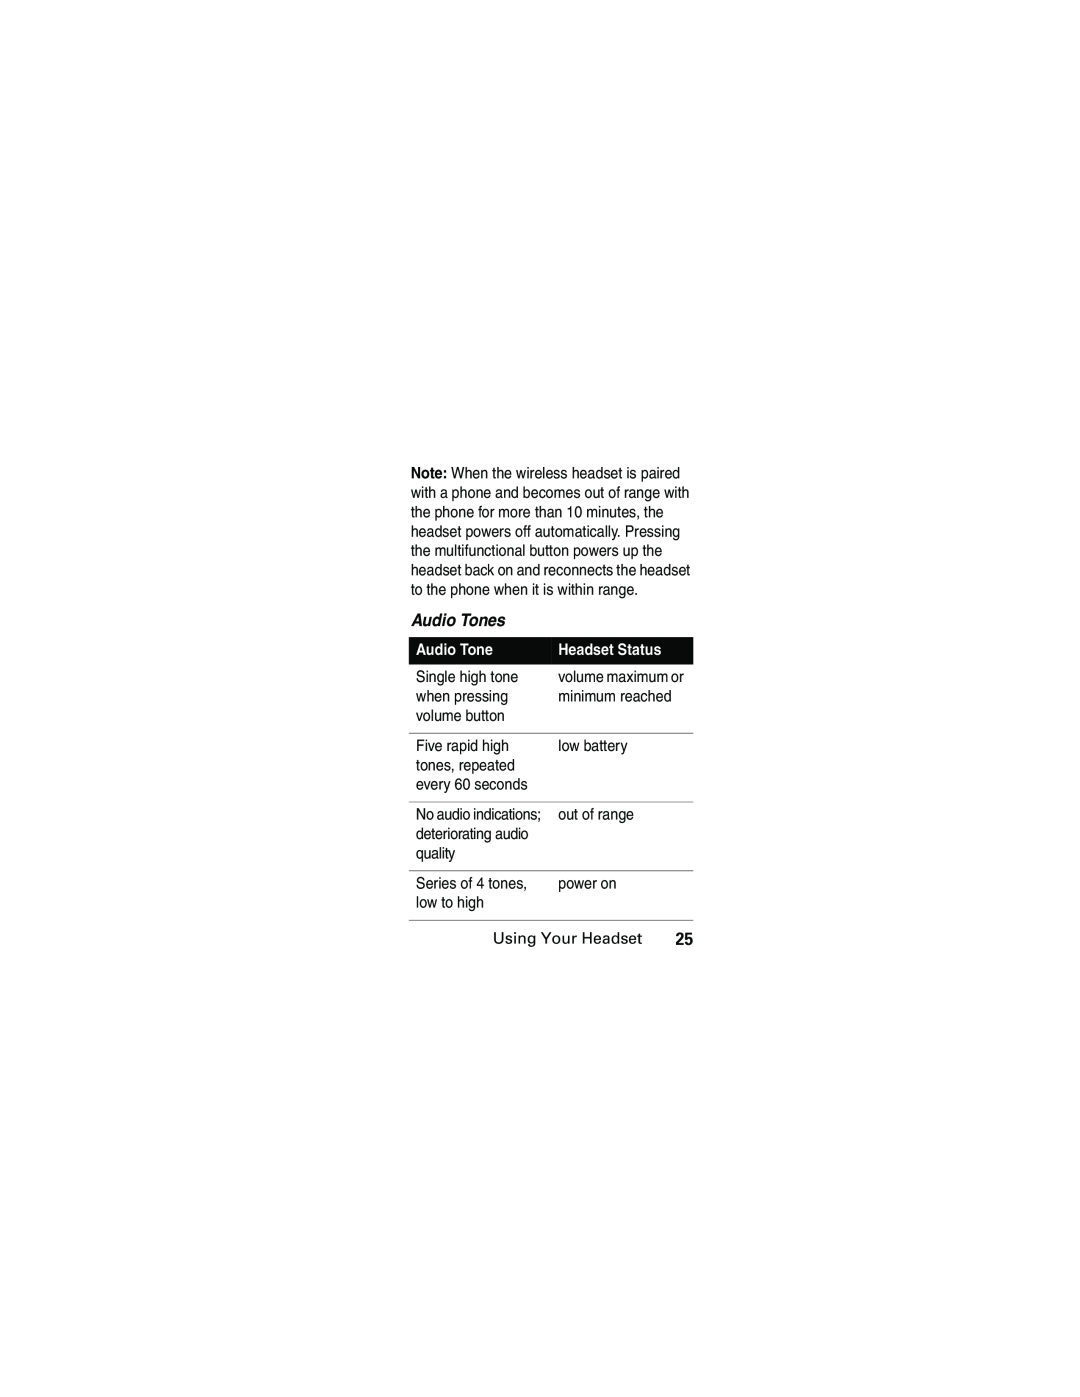 Motorola HS805 manual Audio Tones, Headset Status 